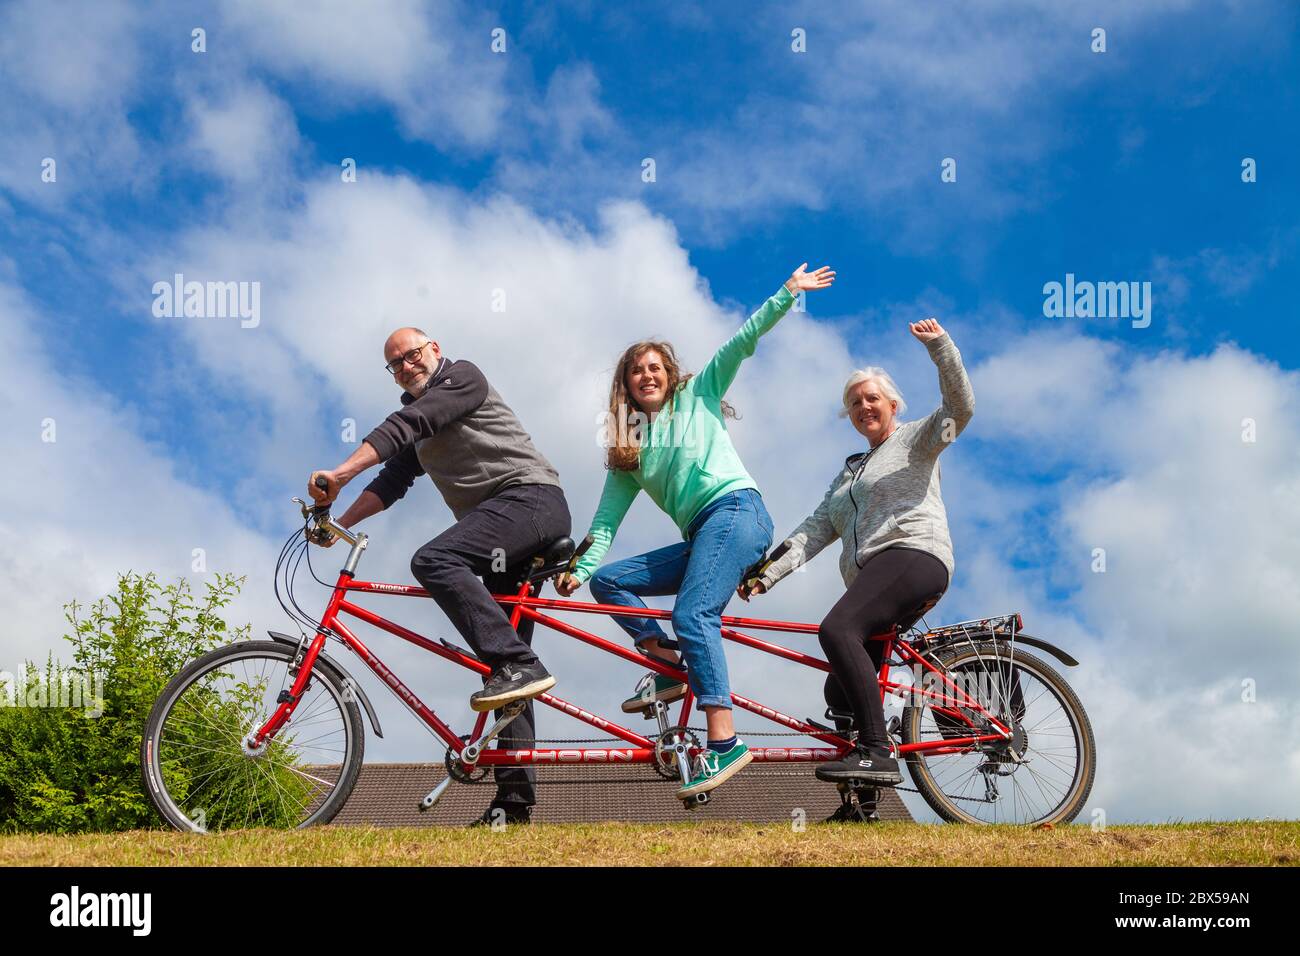 Dalgety Bay, Fife, Scotland. 5 June 2020. The Watson family (L-R Brett,  Emily, Lynne) riding a